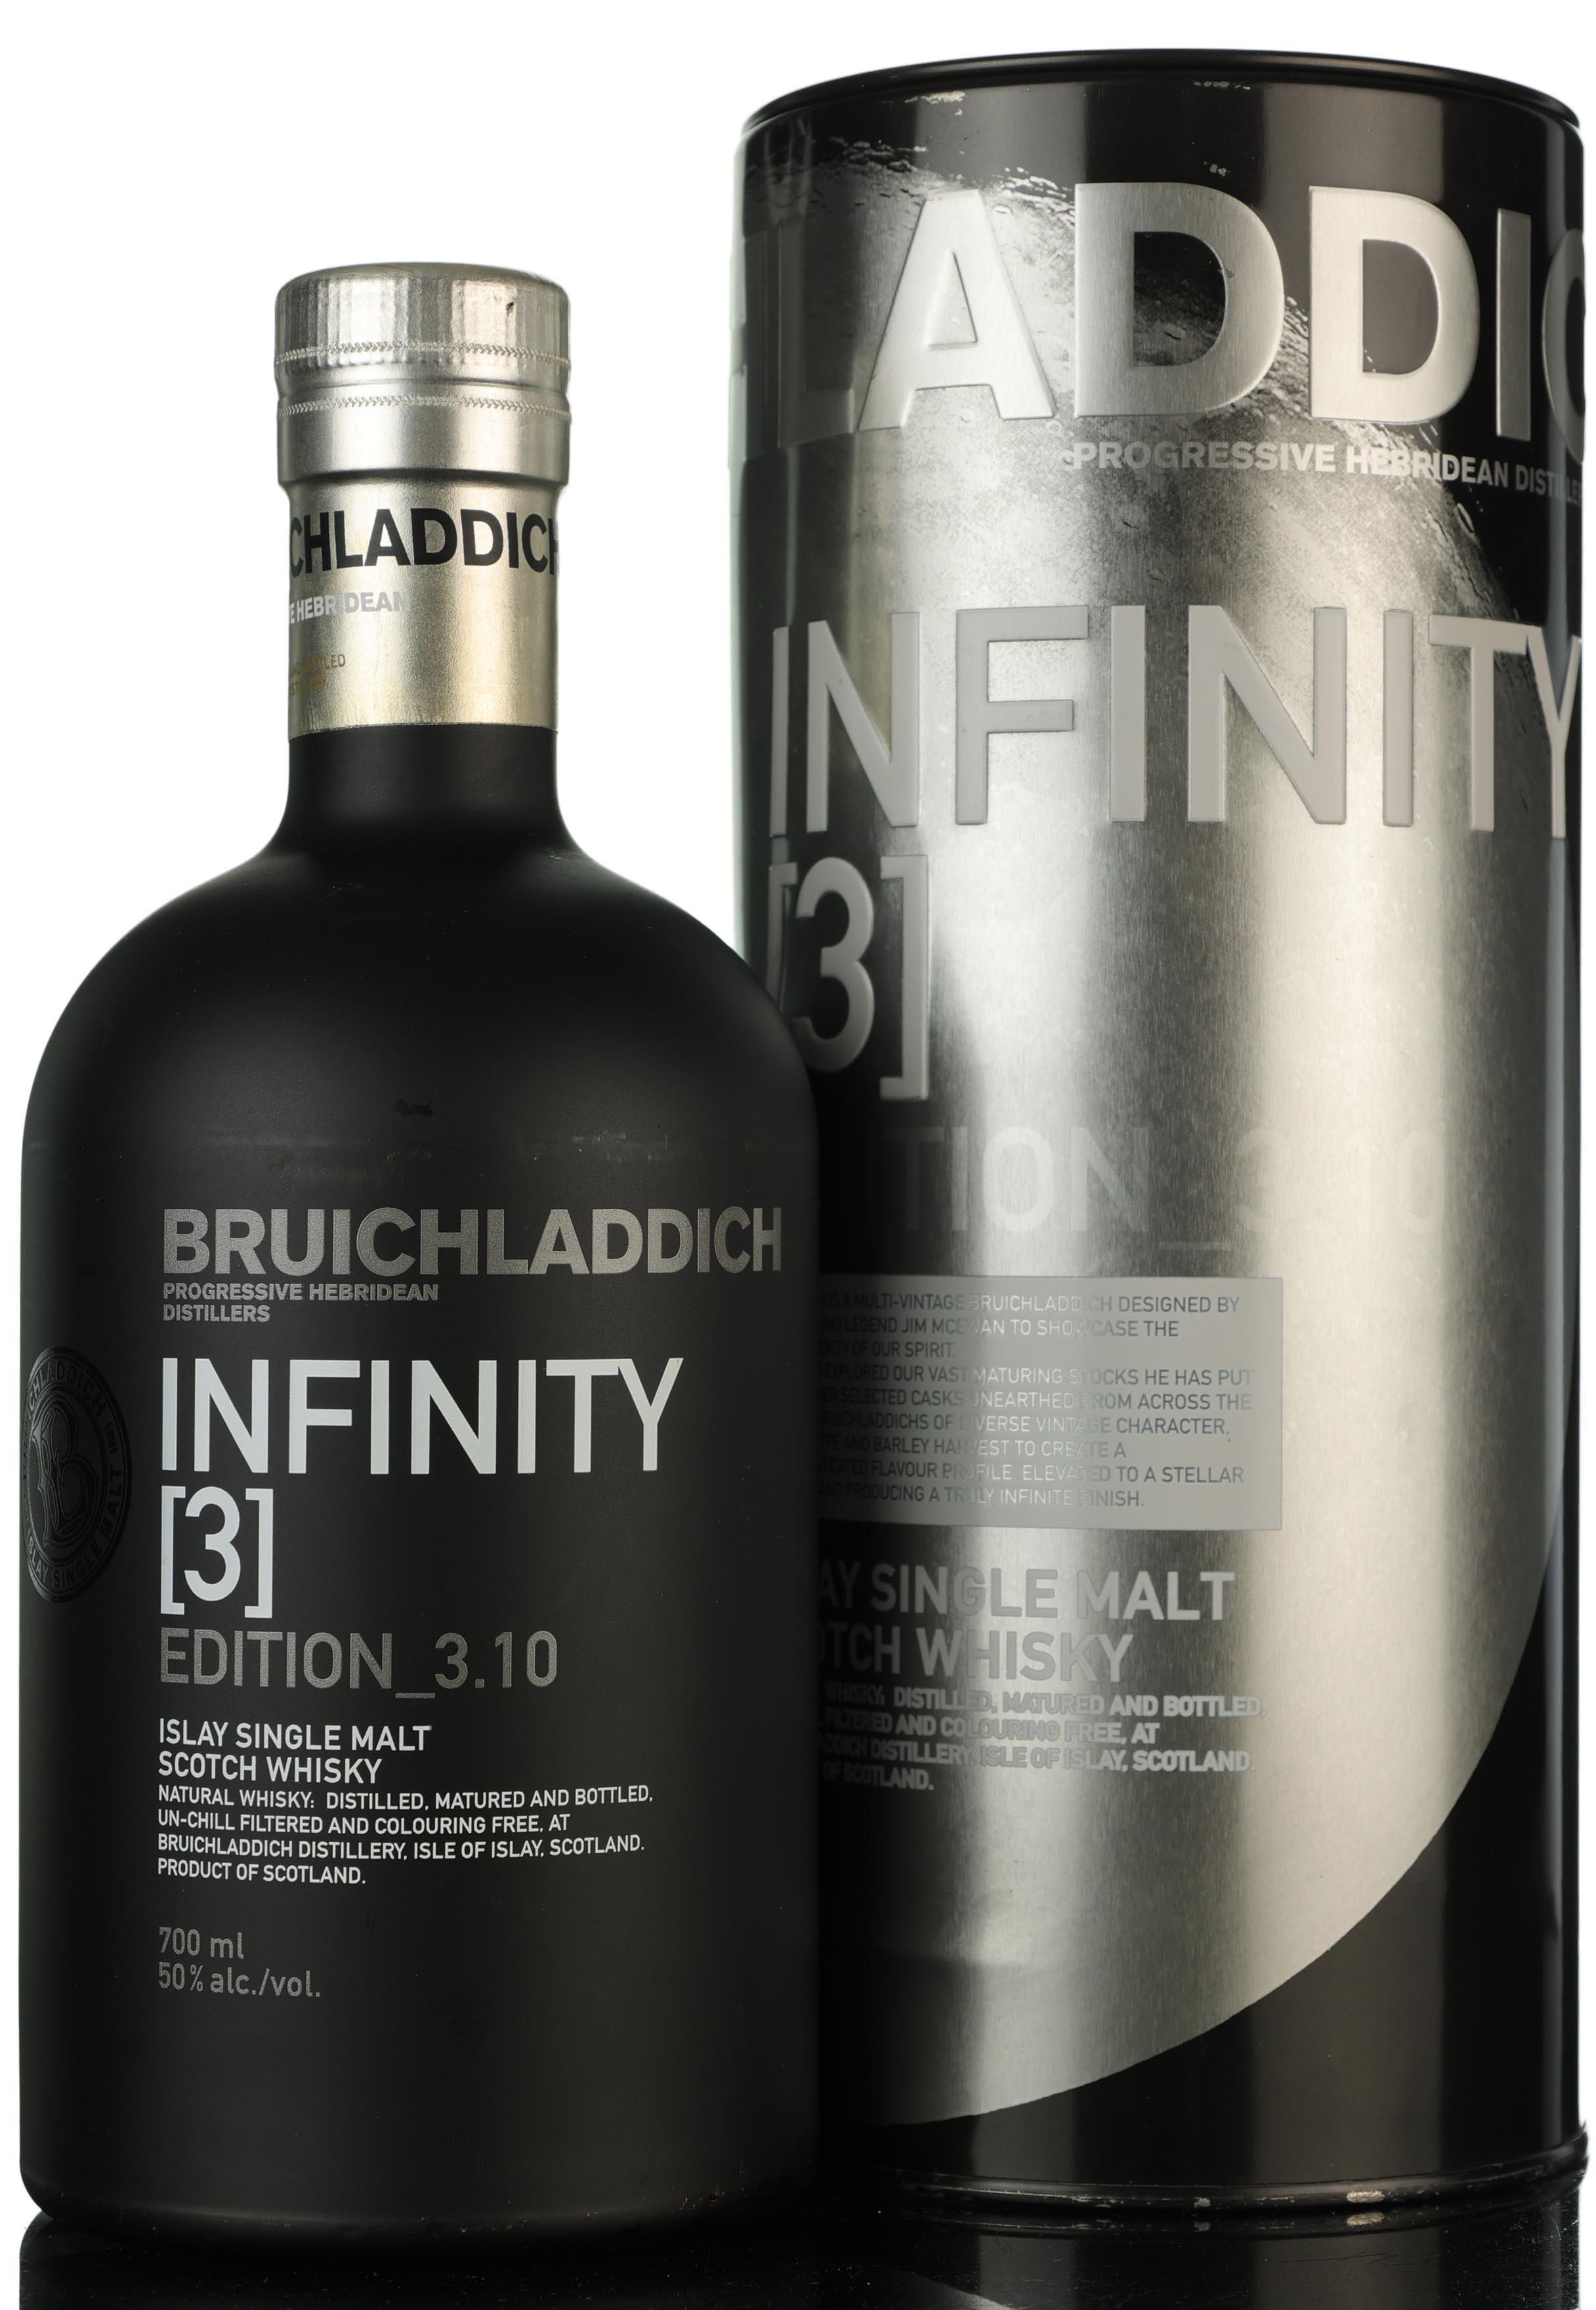 Bruichladdich Infinity - 3rd Edition - 2010 Release